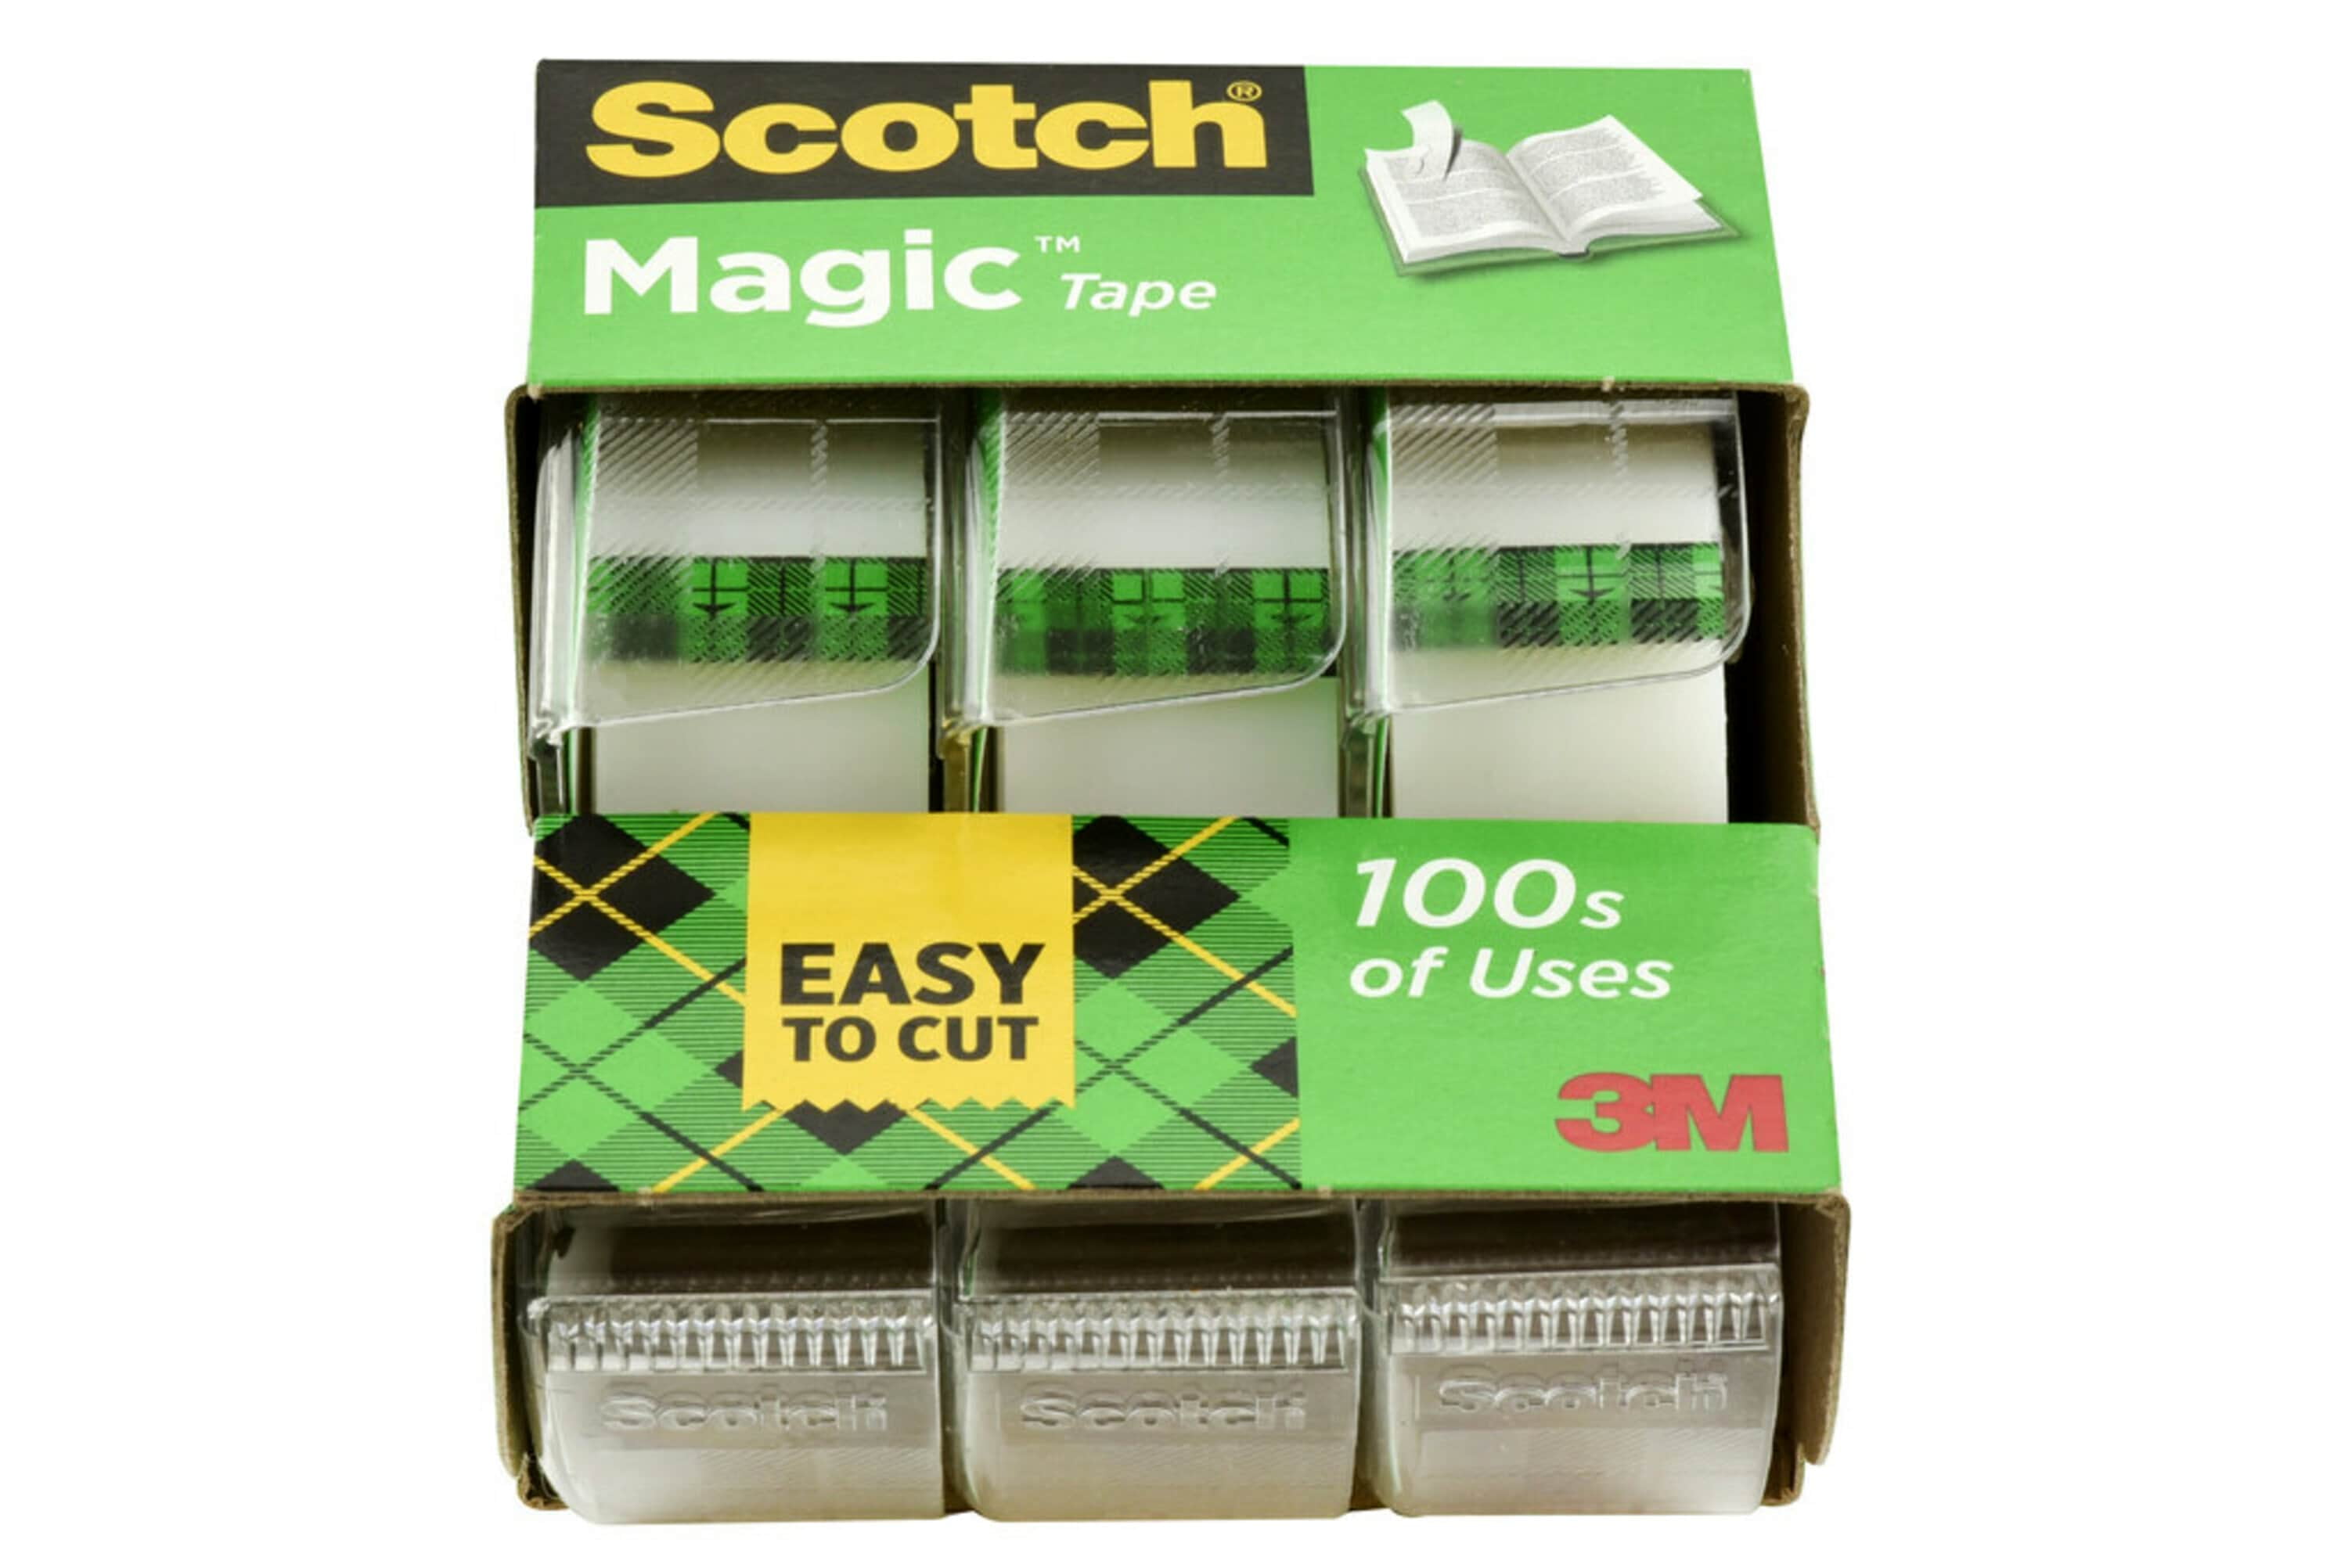 Scotch Magic Tape Dispenser Record Player 